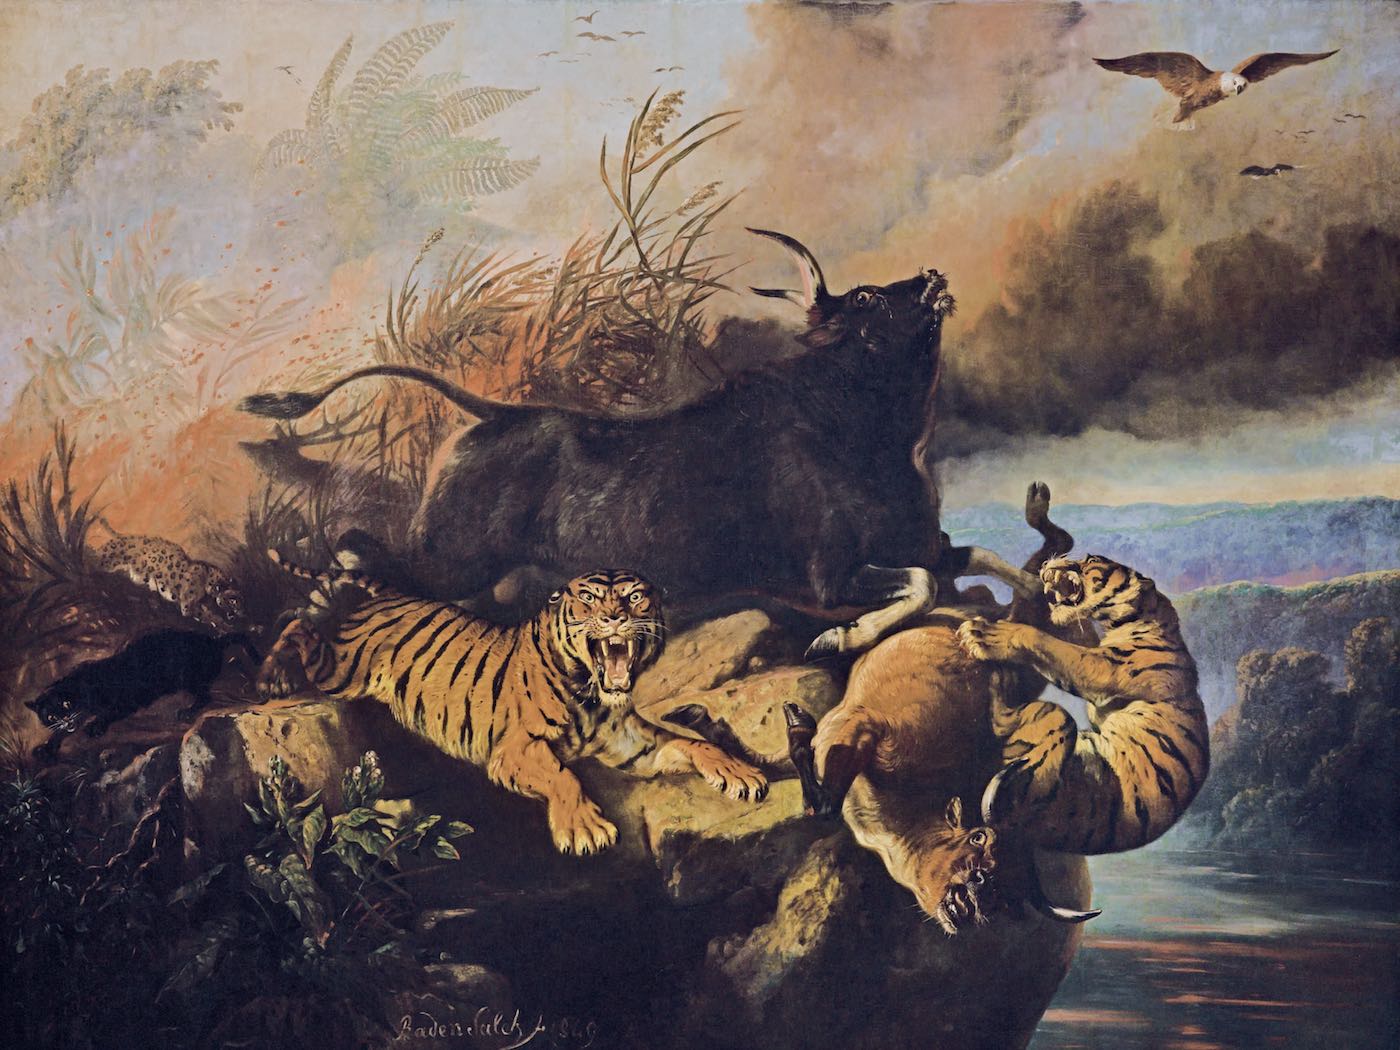 “Forest Fire” by Raden Saleh, 1849